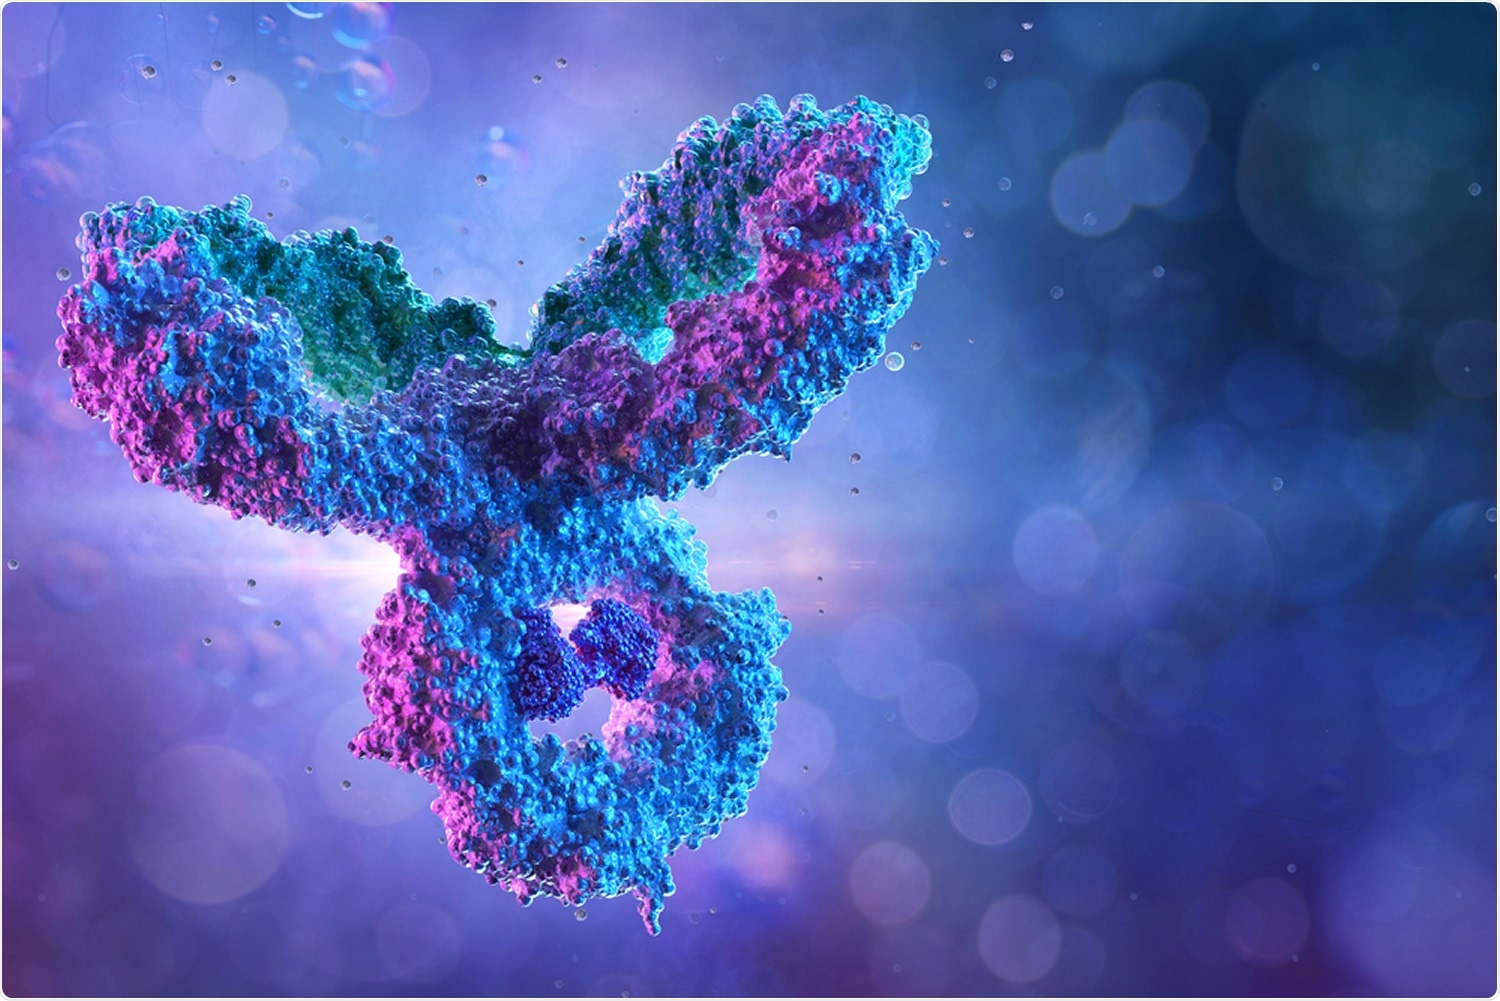 Study: Development and validation of an enzyme immunoassay for detection and quantification of SARS-CoV-2 salivary IgA and IgG. Image Credit: Corona Borealis Studio / Shutterstock